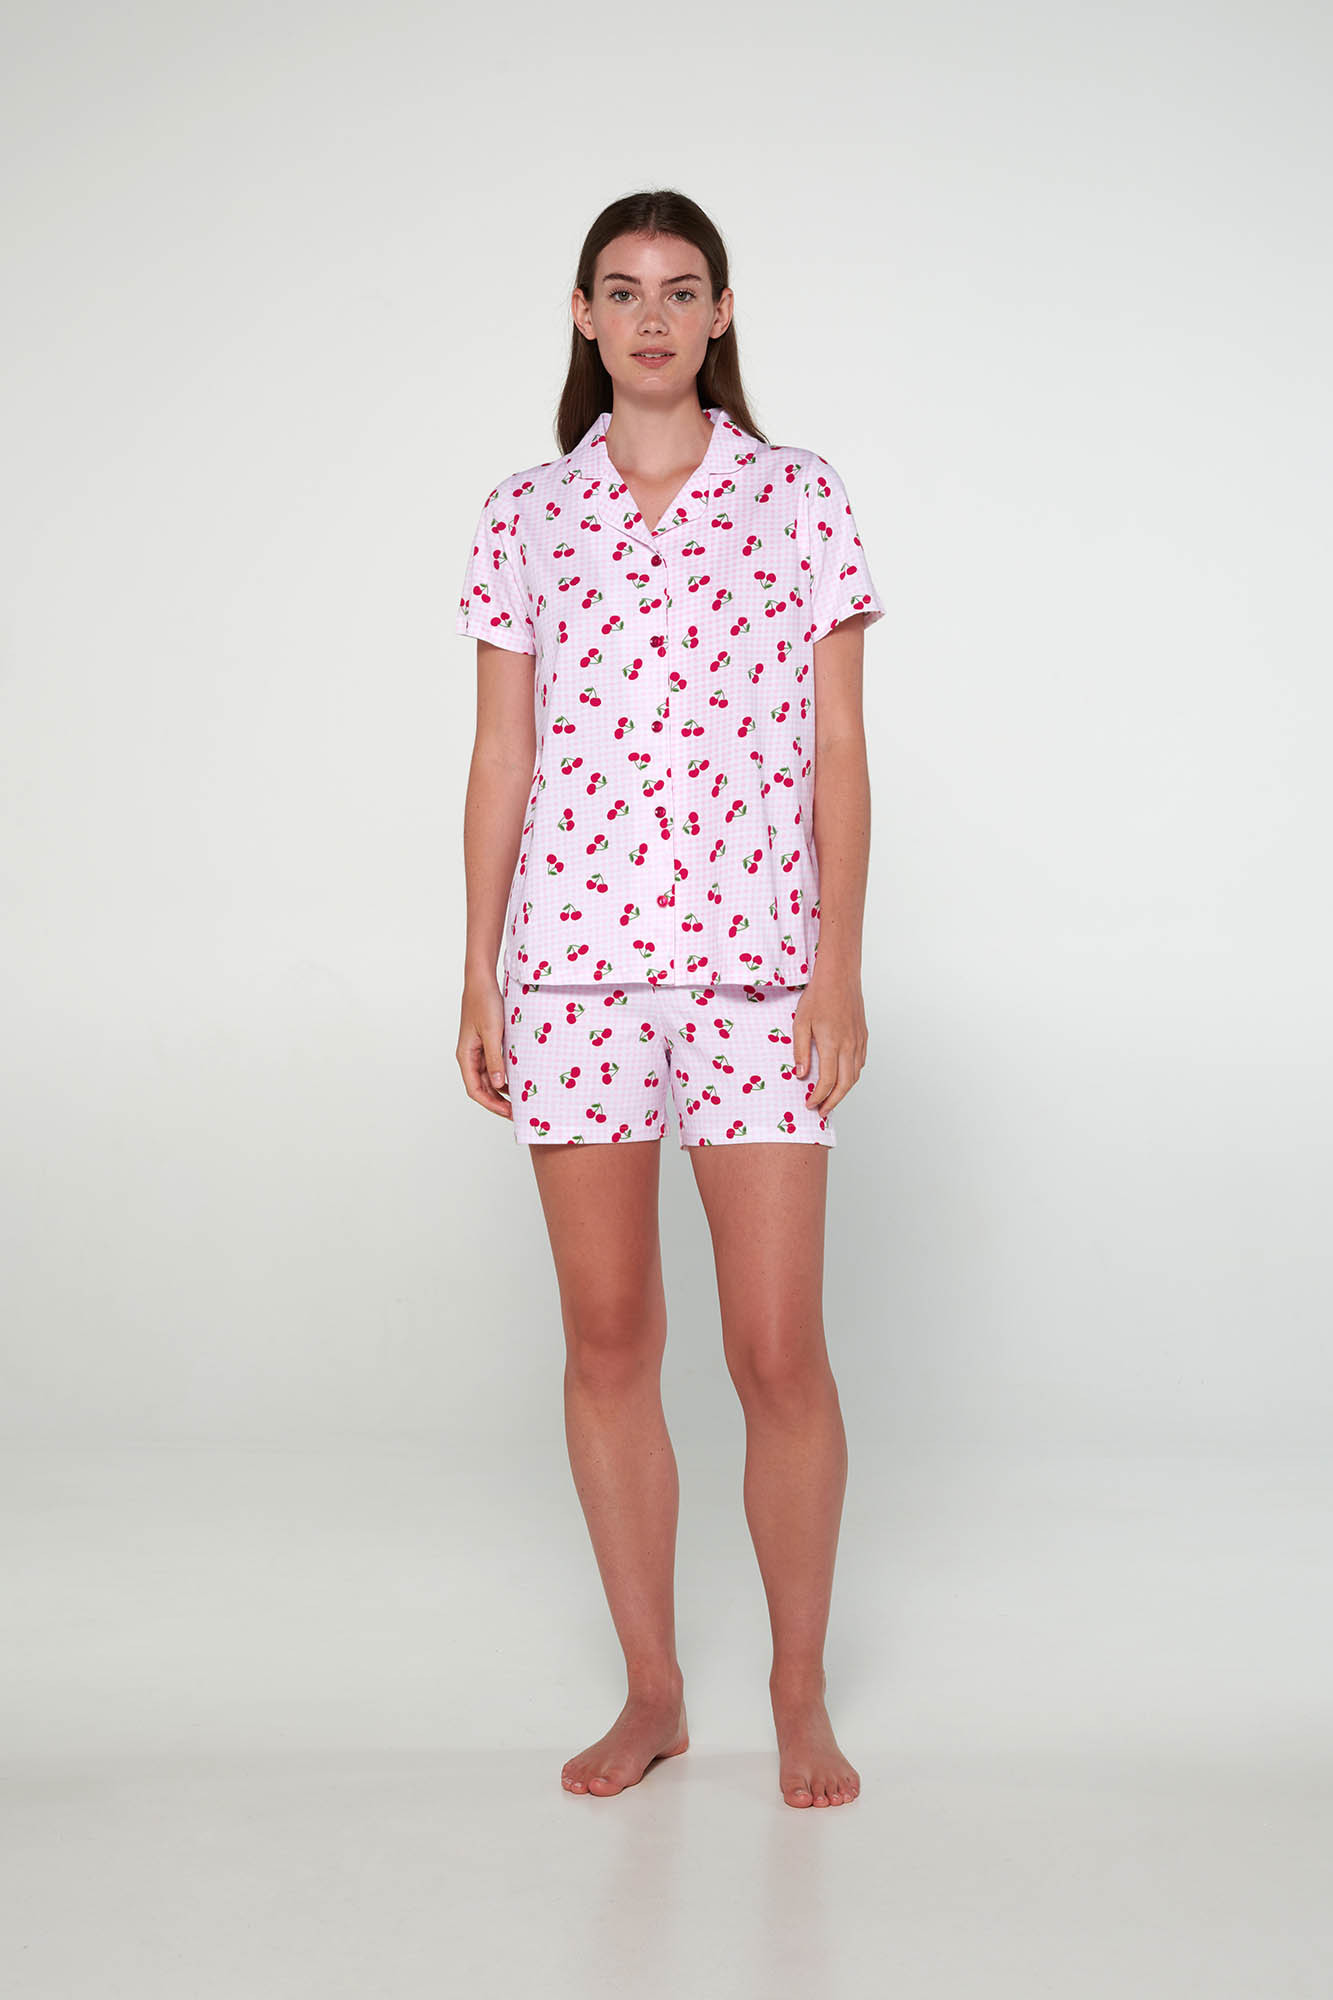 Vamp - Pyžamo s potiskem a knoflíky 20317 - Vamp pink blossom XL